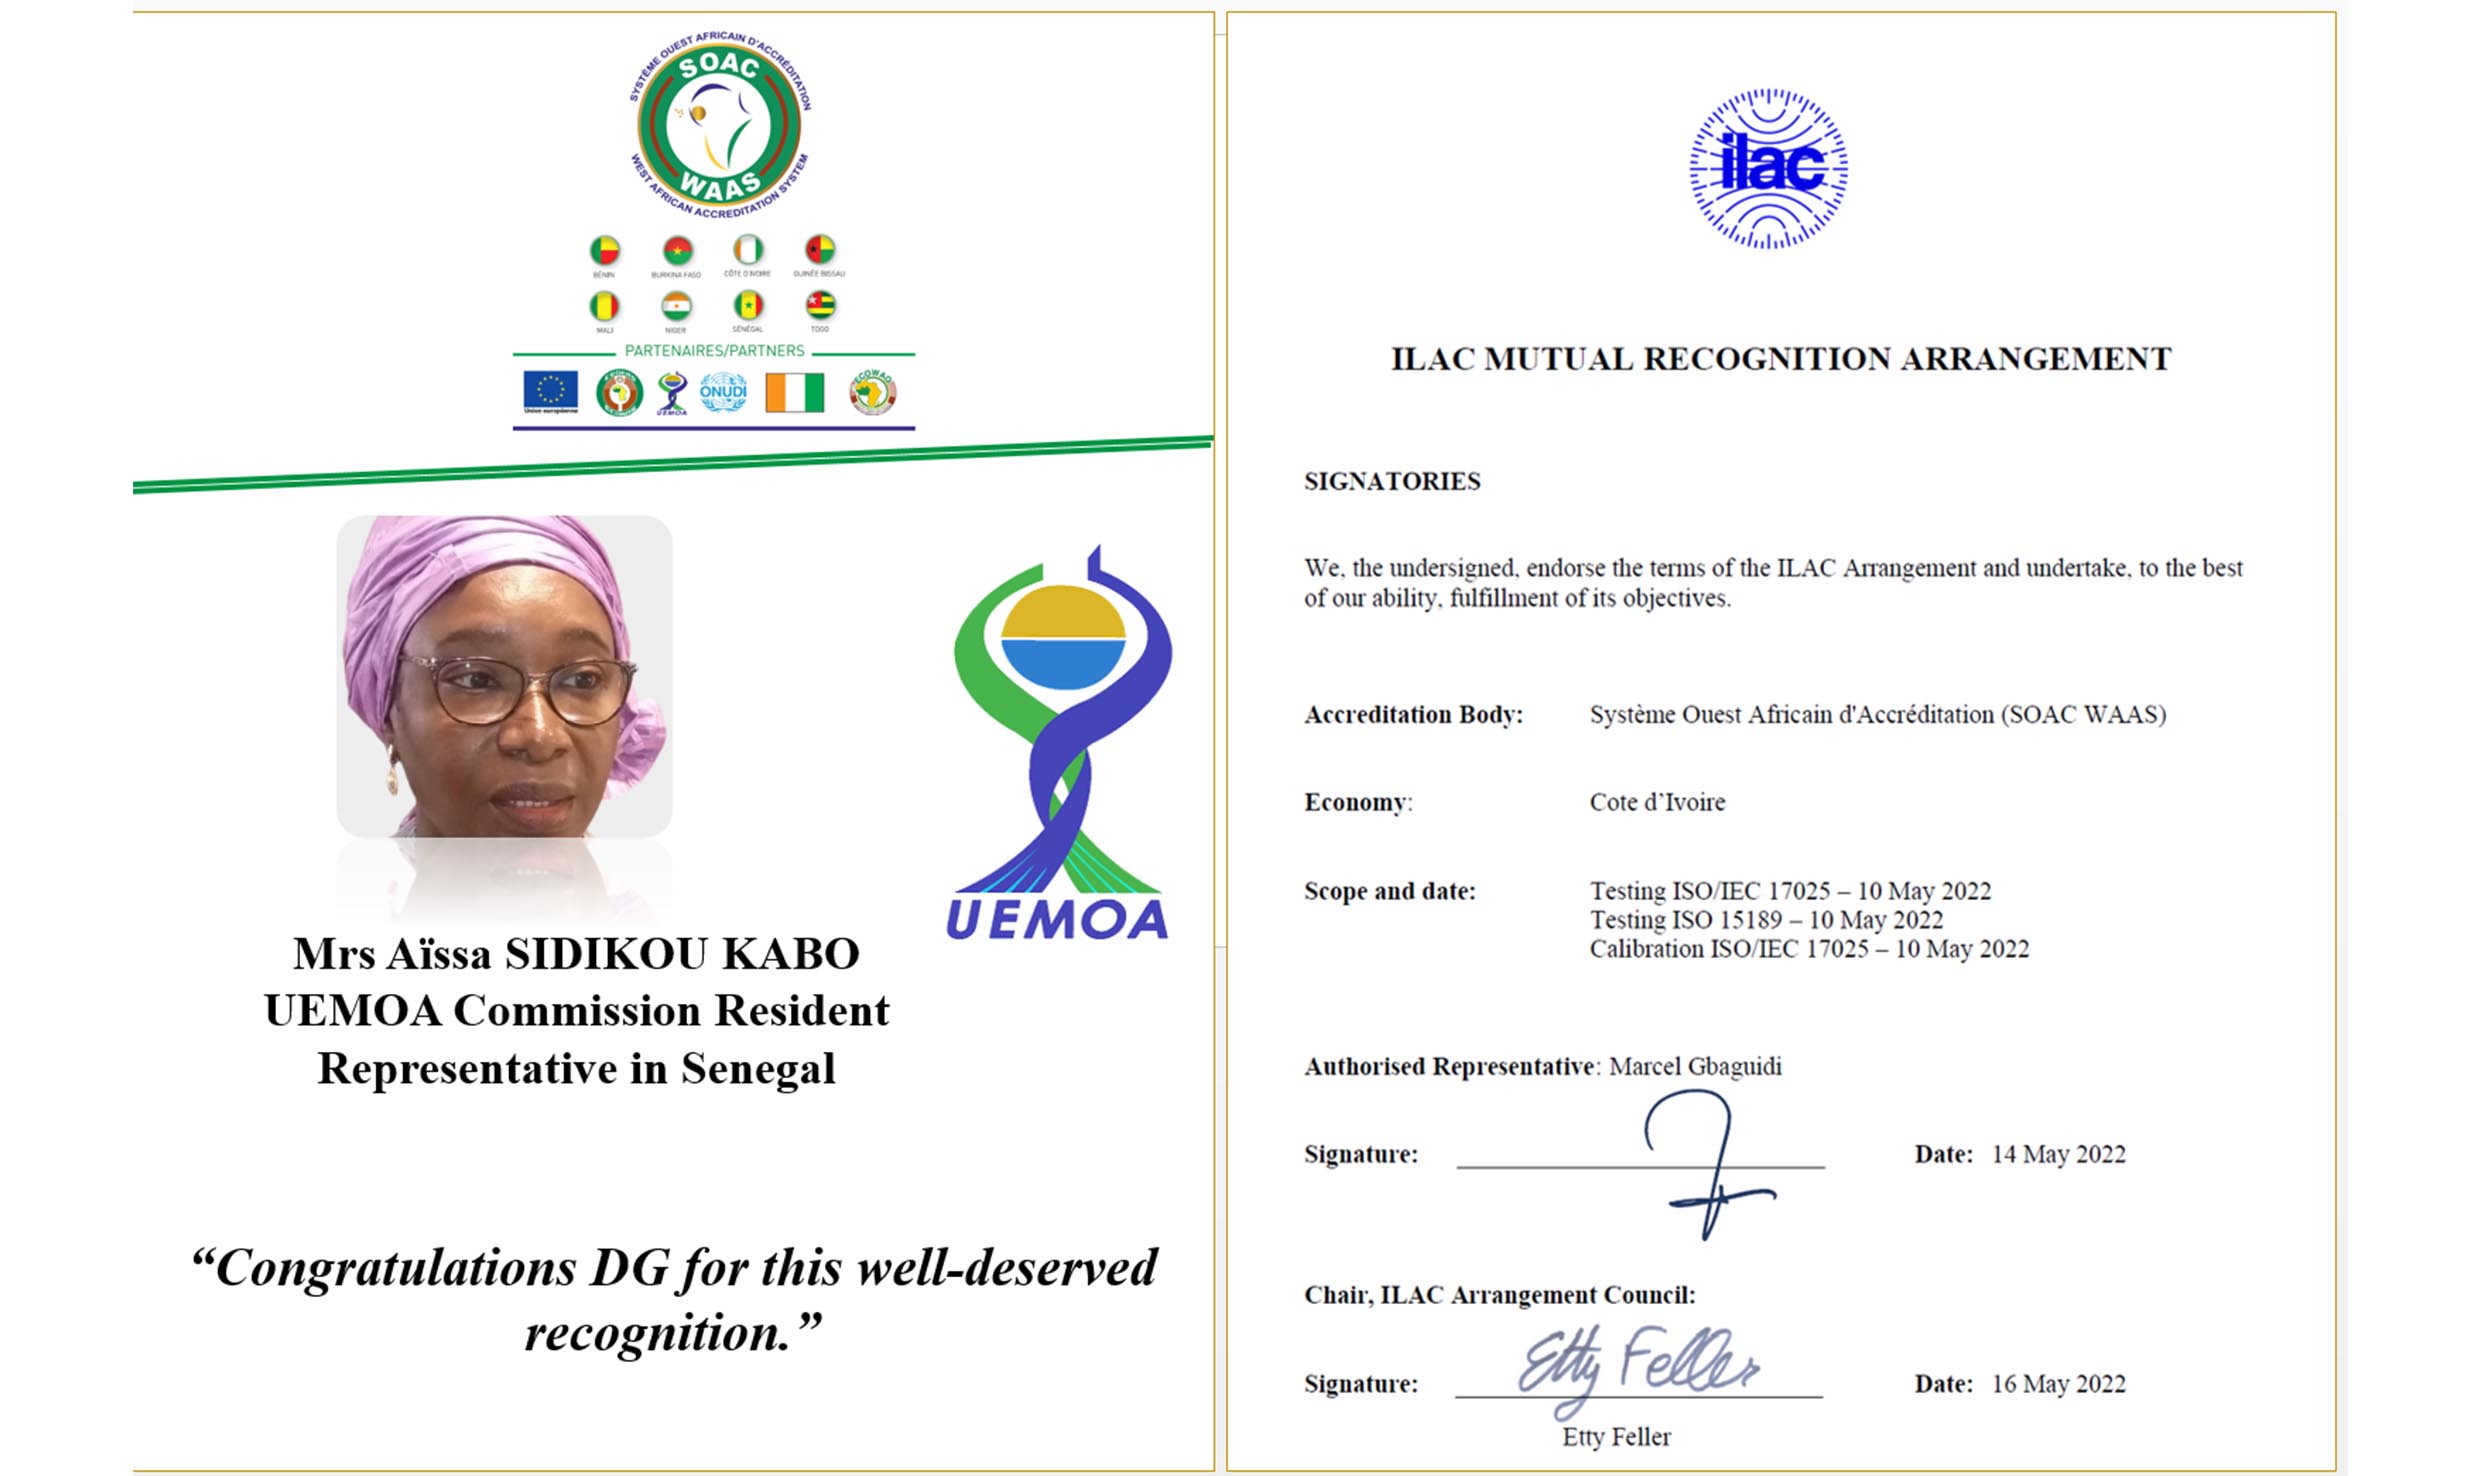 Mrs Aissa SIDIKOU KABO, UEMOA Commission Resident Representative, Senegal